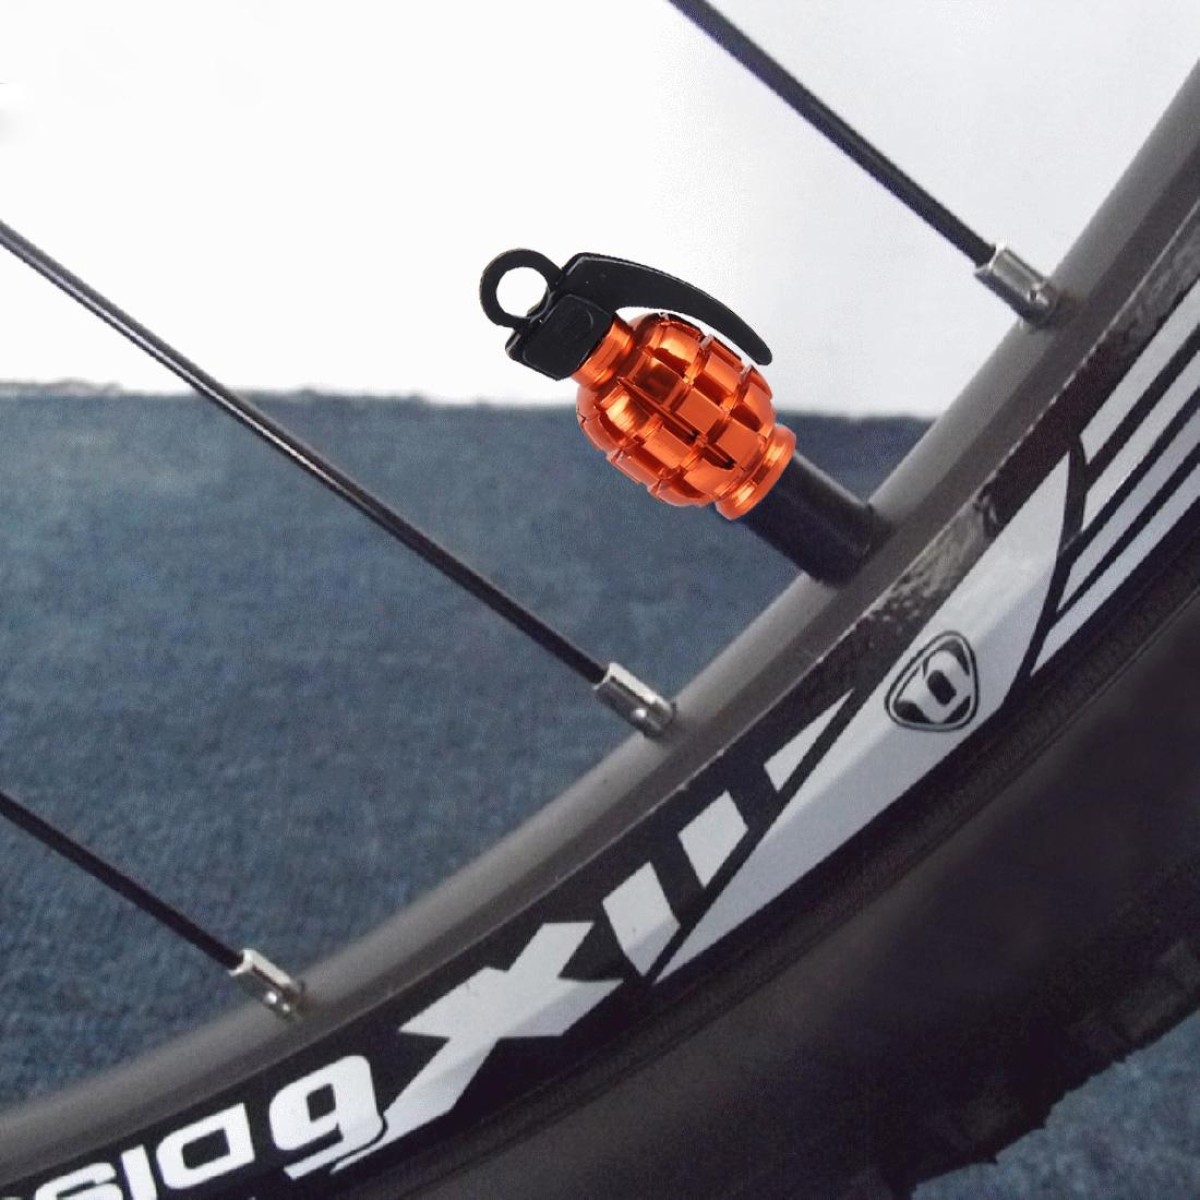 4 PCS Universal Grenade Shaped Bicycle Tire Valve Caps(Orange)